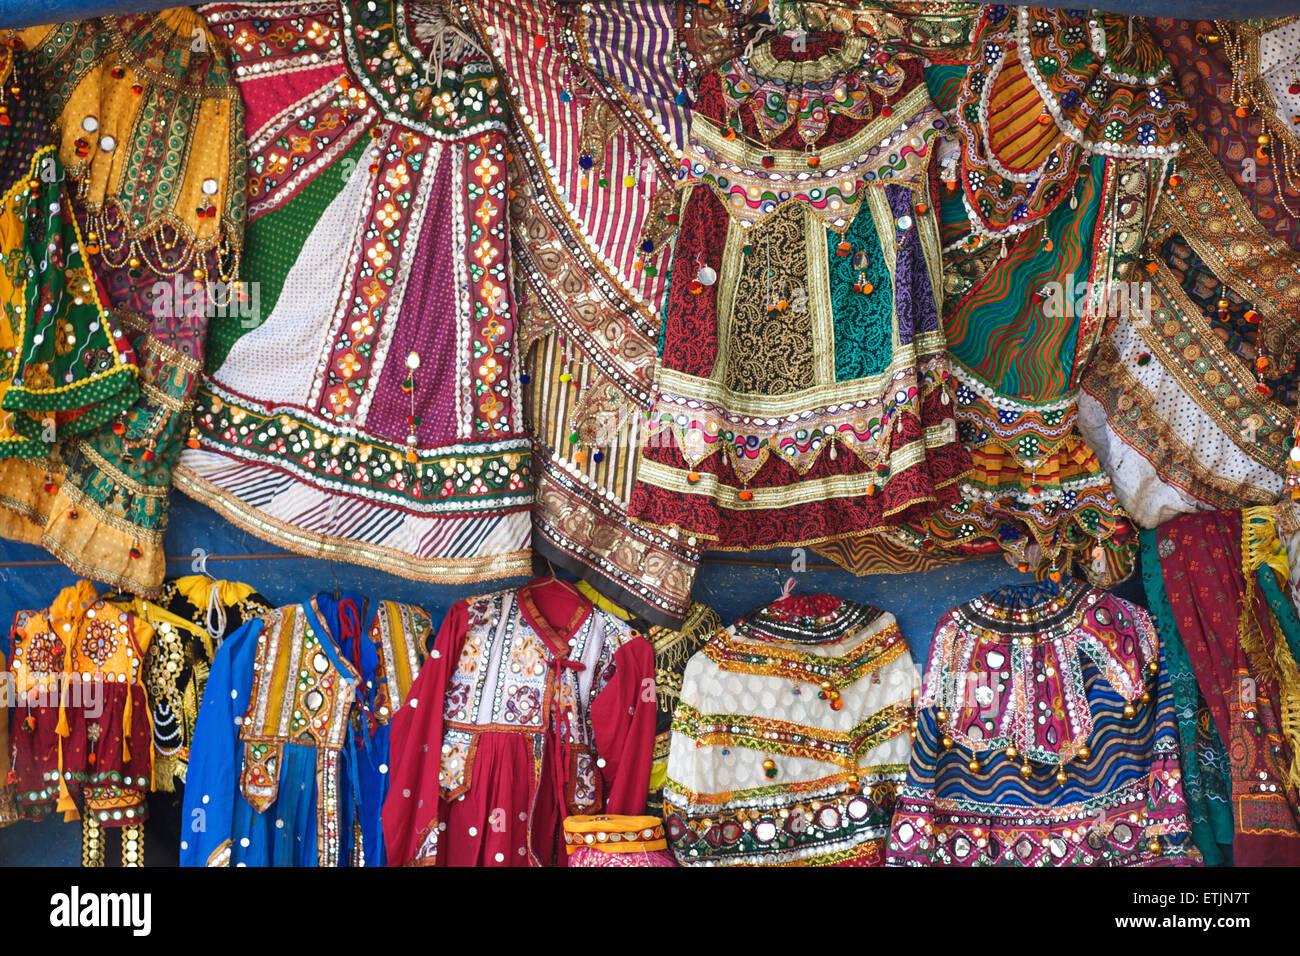 Rajasthani costume. Mount Abu, Rajasthan, India Stock Photo